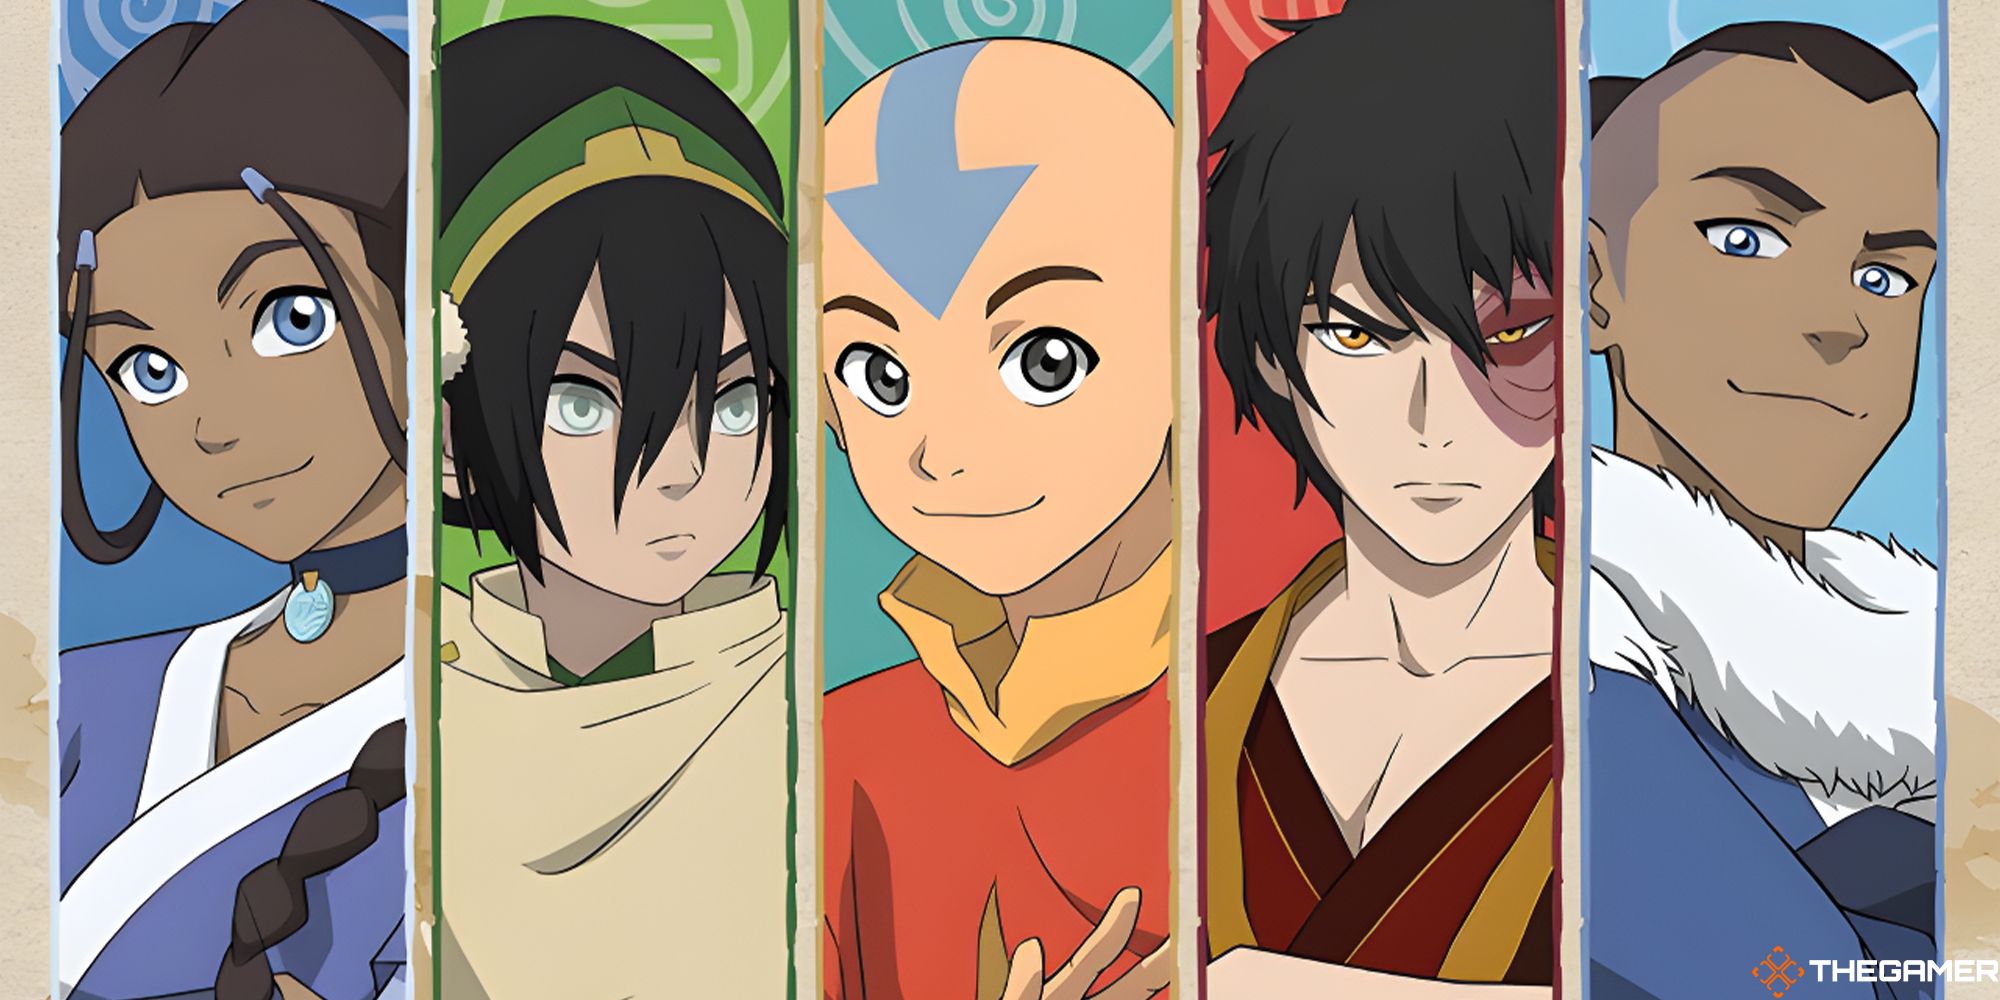 Katara, Toph, Aang, Zuko, and Sokka from Avatar: The Last Airbender